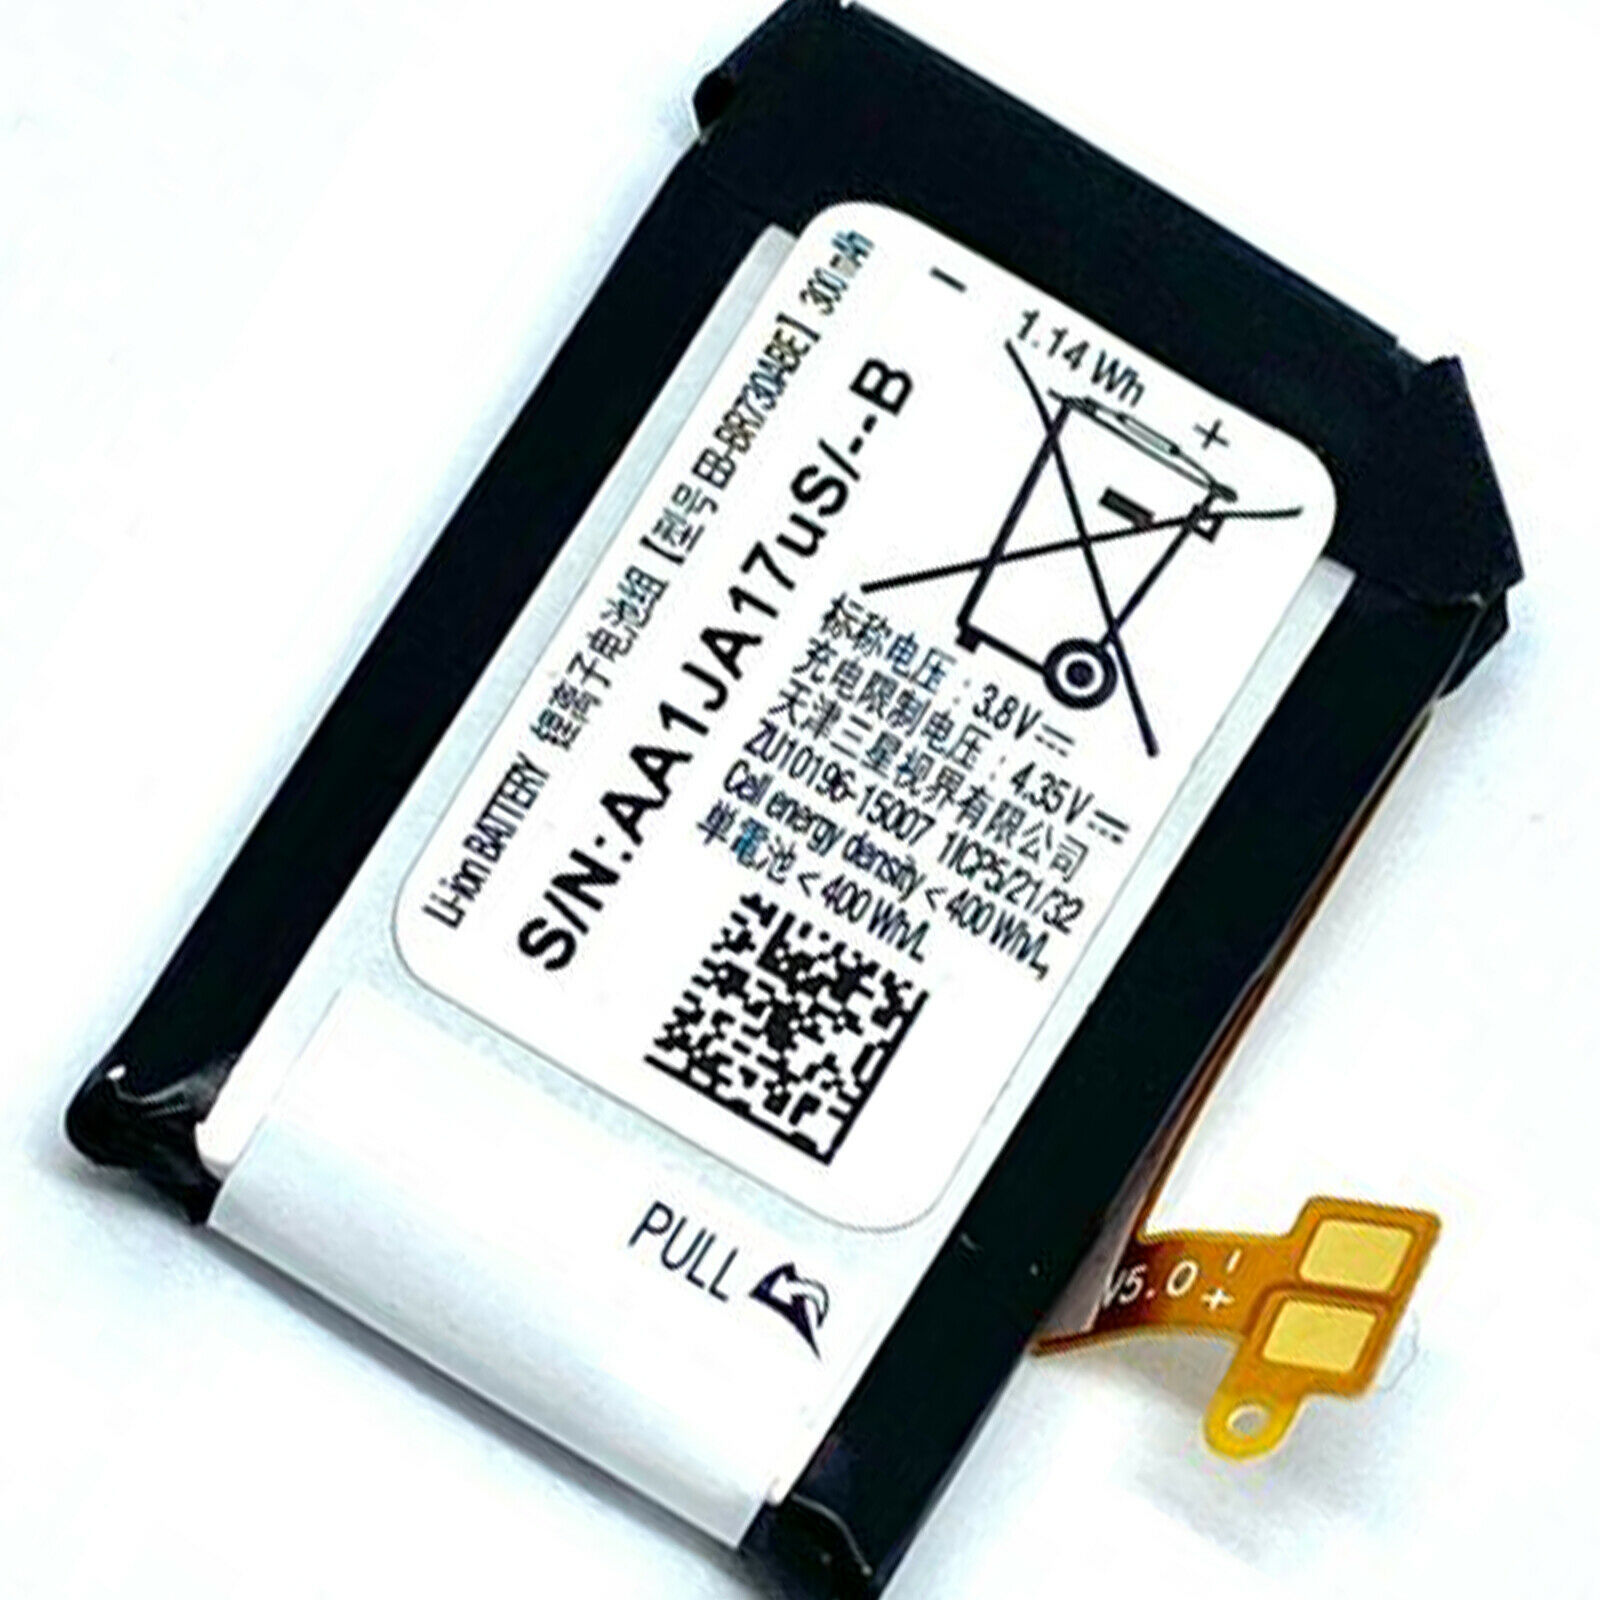 SAMSUNG EB-BR730ABE FOR GEAR SPORT SM-R600 GEAR S2 SM-R730A/R735A 300mAh compatible Battery